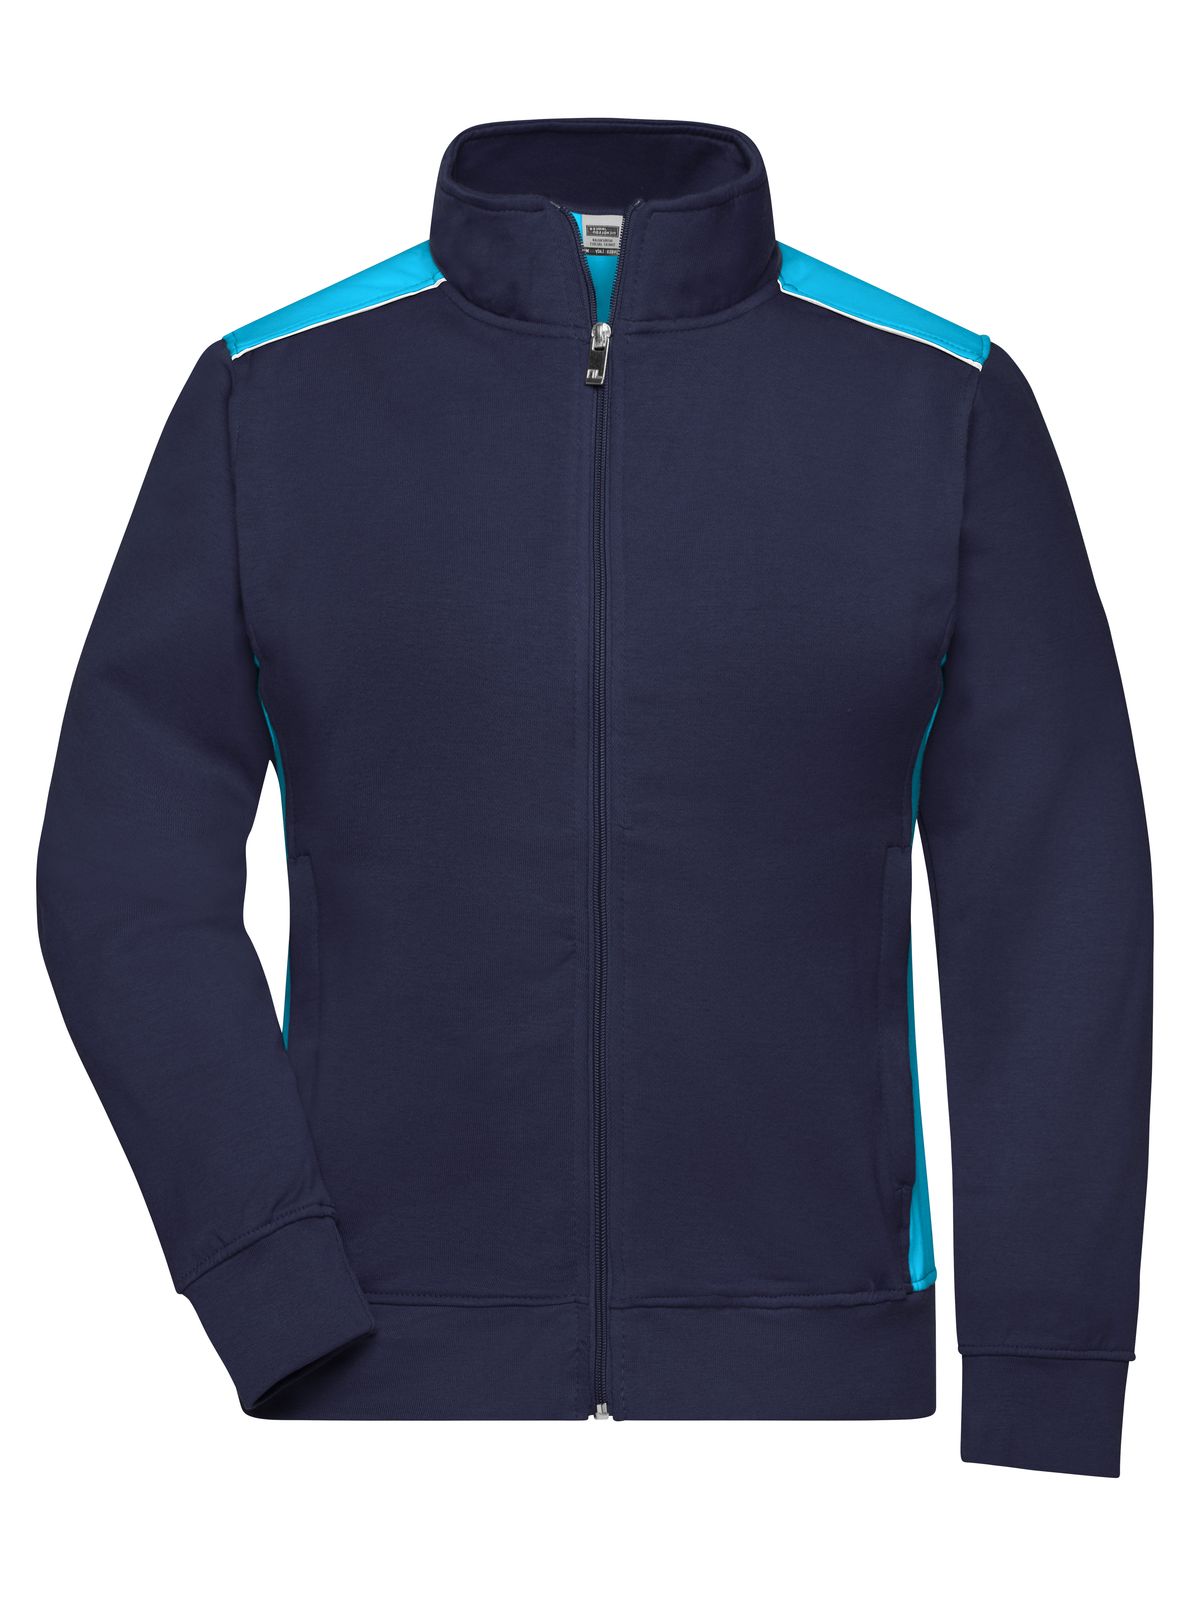 ladies-workwear-sweat-jacket-color-navy-tourquoise.webp